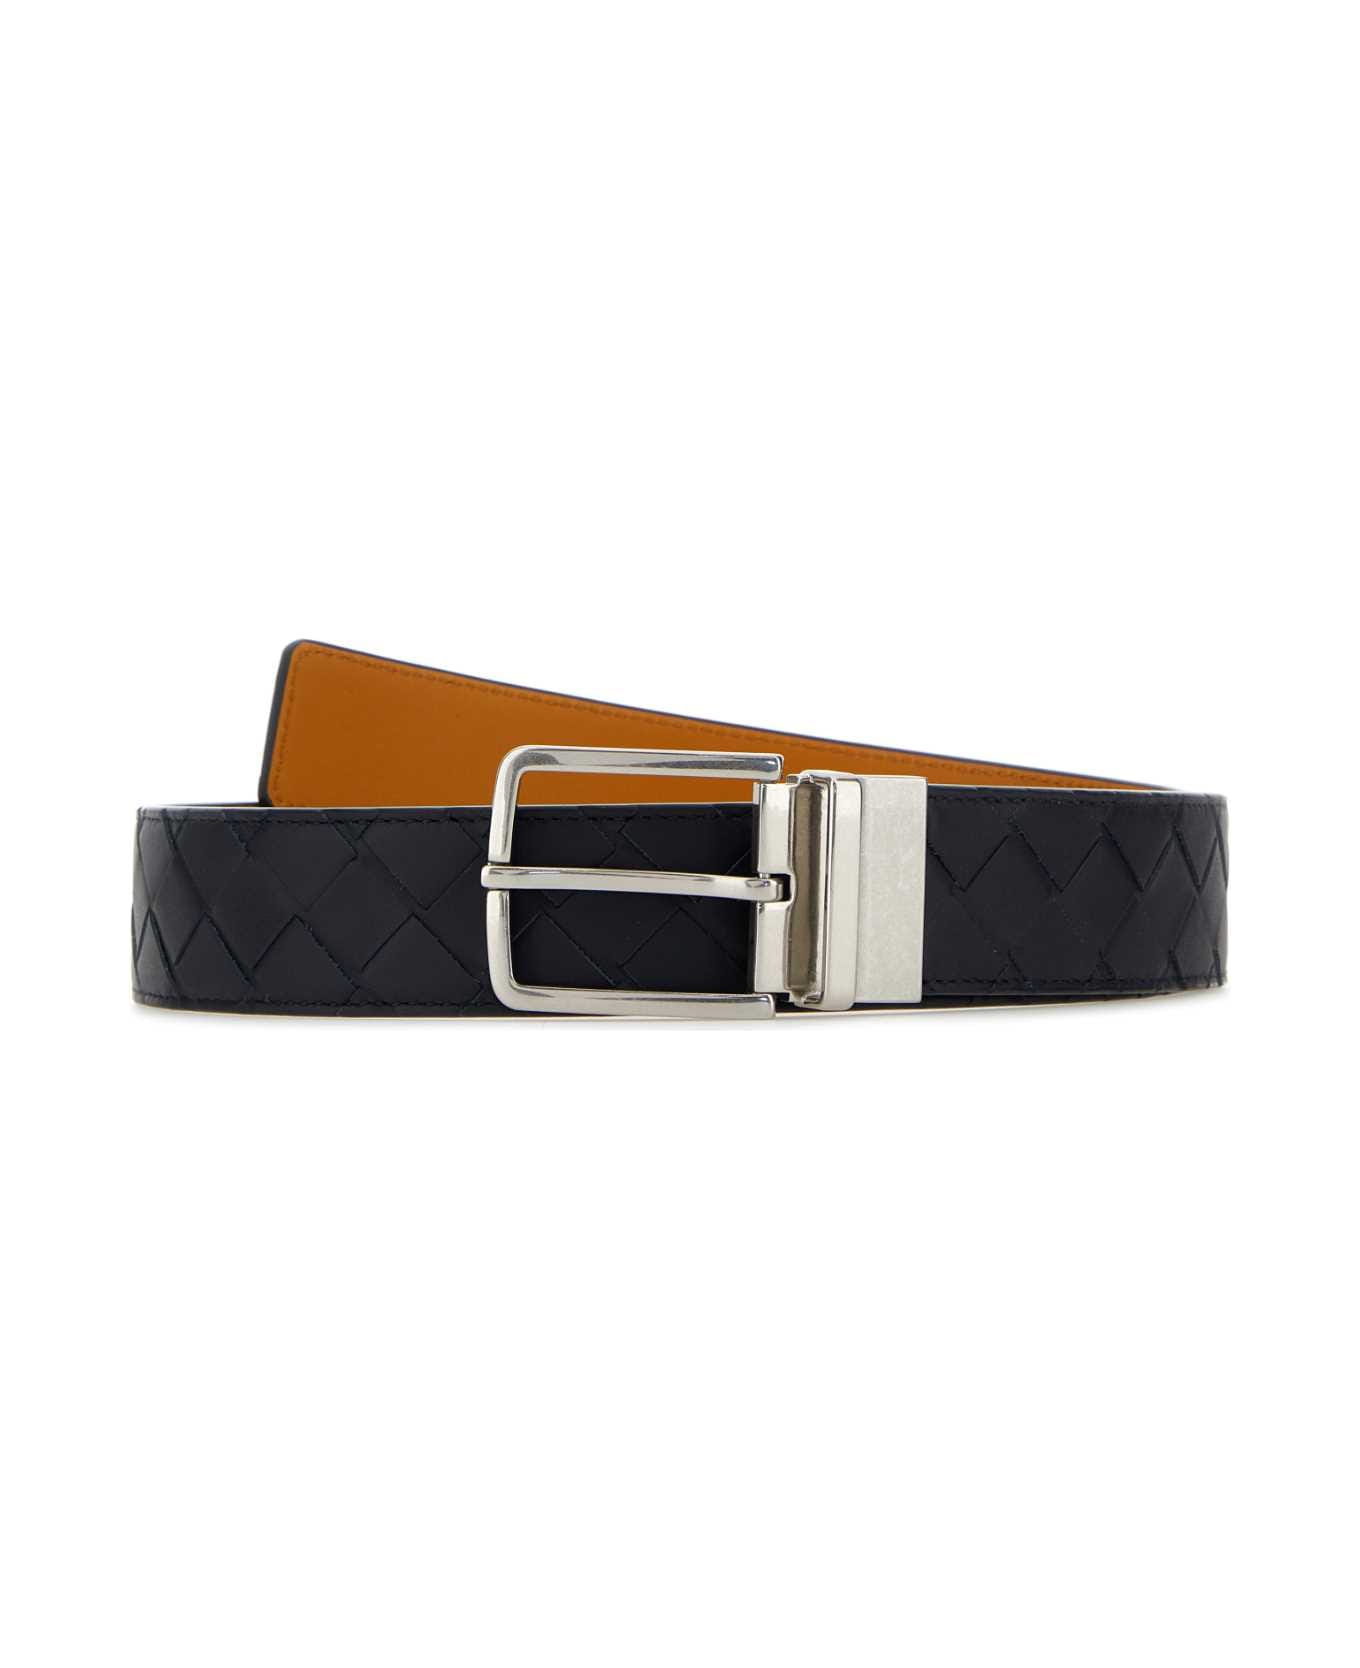 Bottega Veneta Black Leather Belt - SILVER